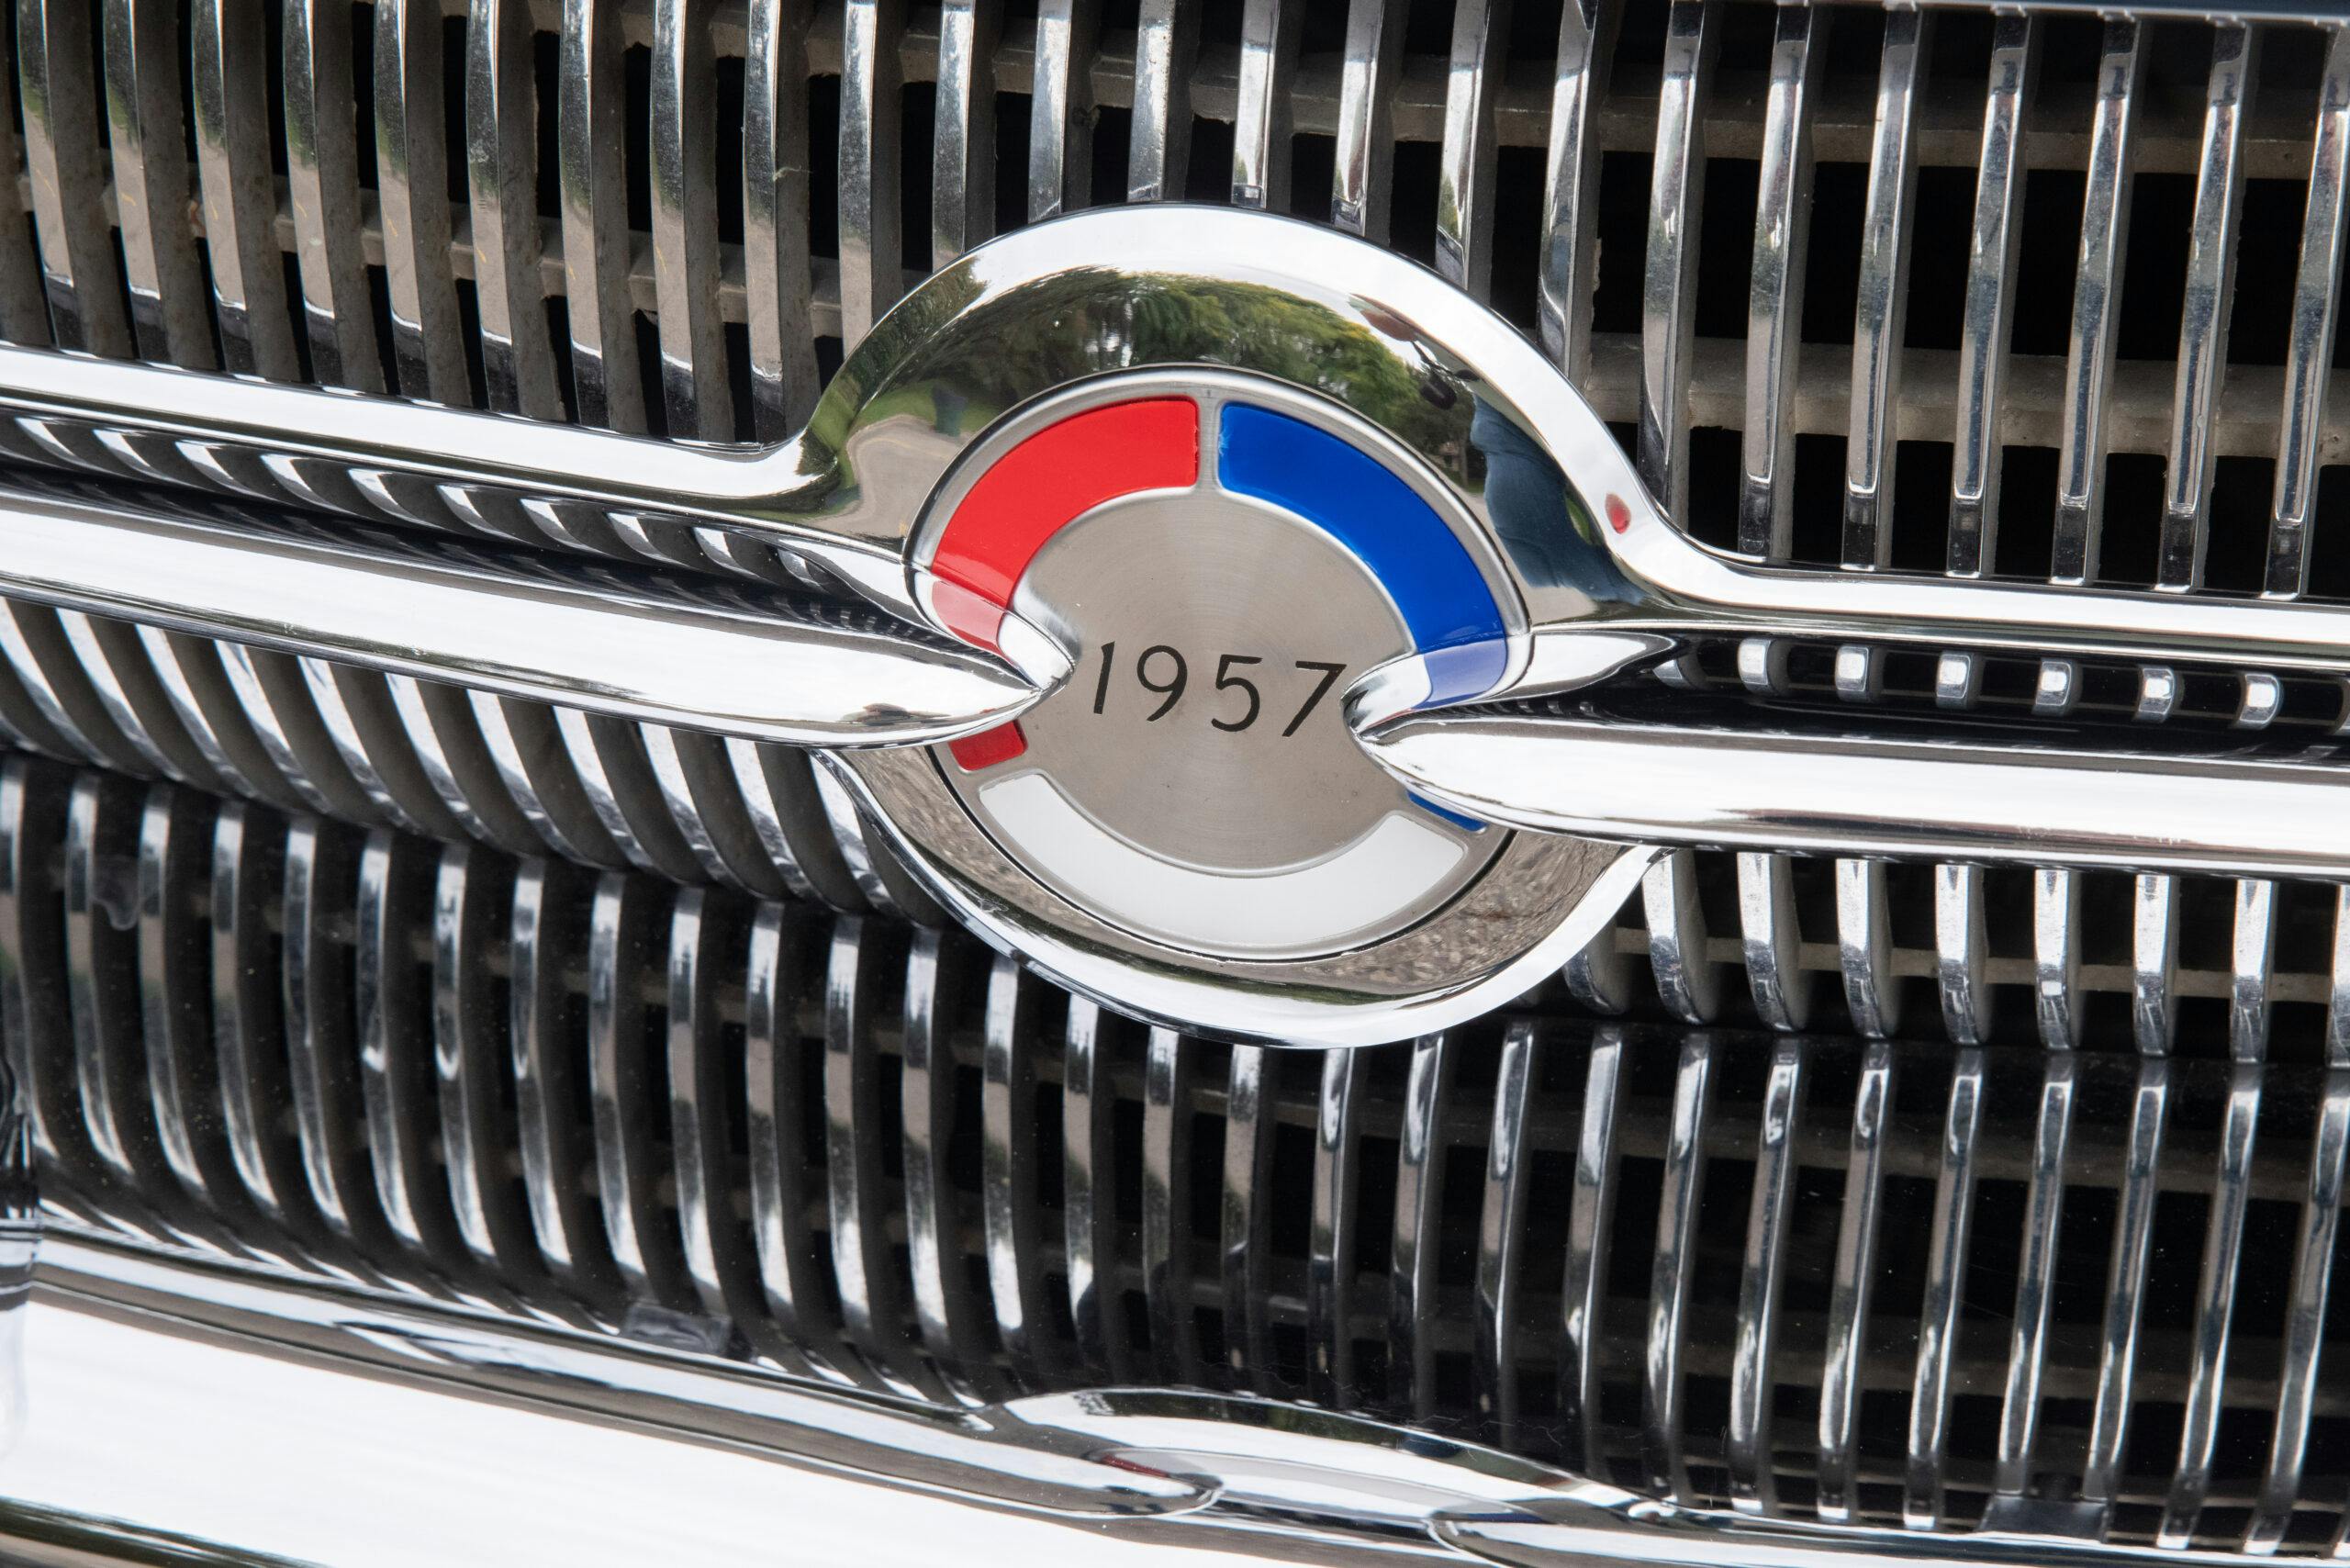 1957 Buick Estate Wagon year emblem